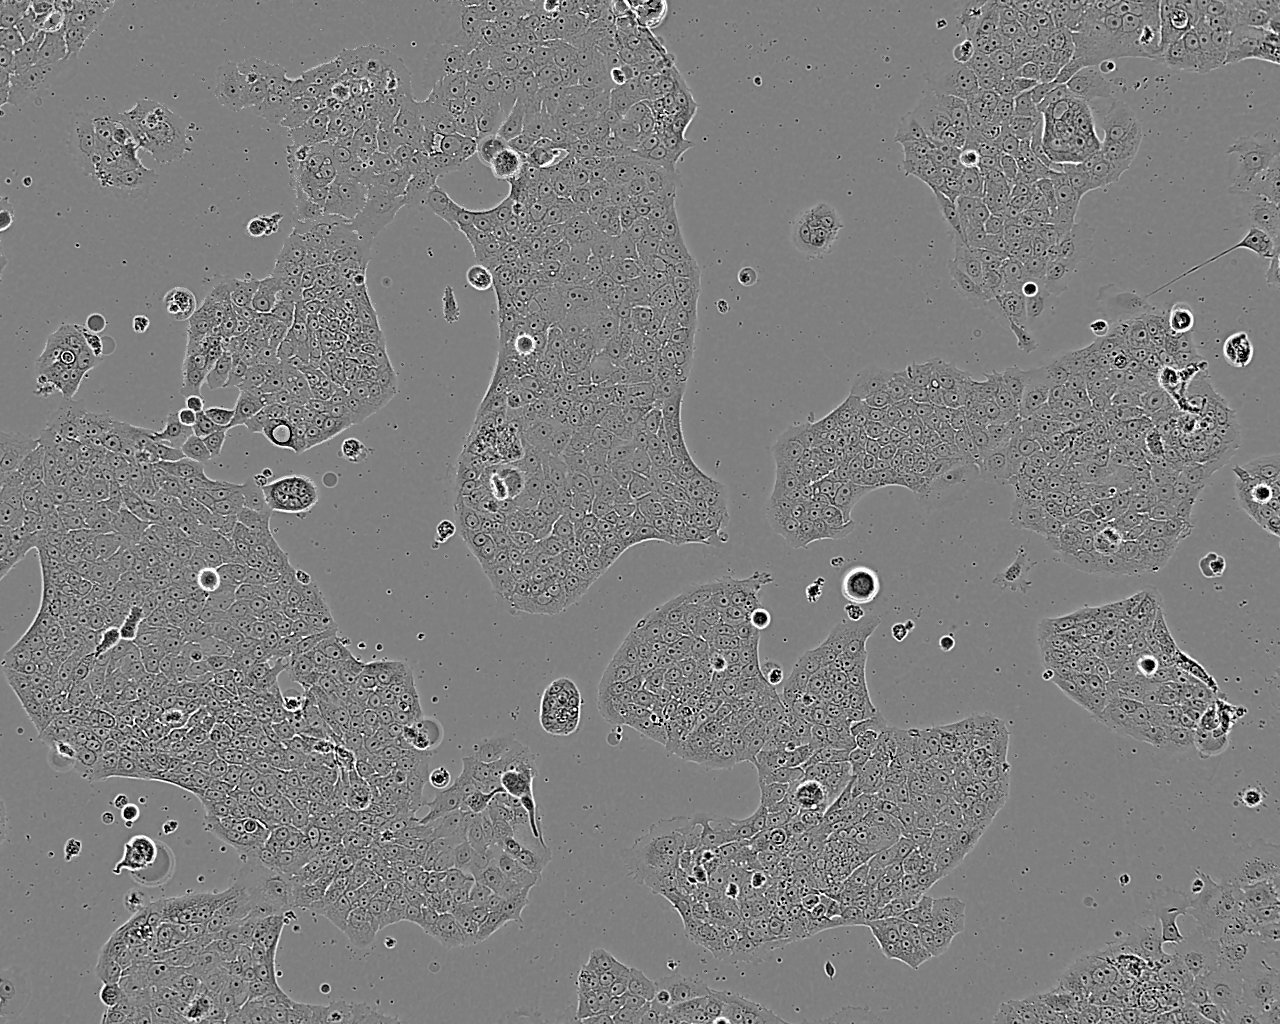 OE33 epithelioid cells人食管腺癌细胞系,OE33 epithelioid cells